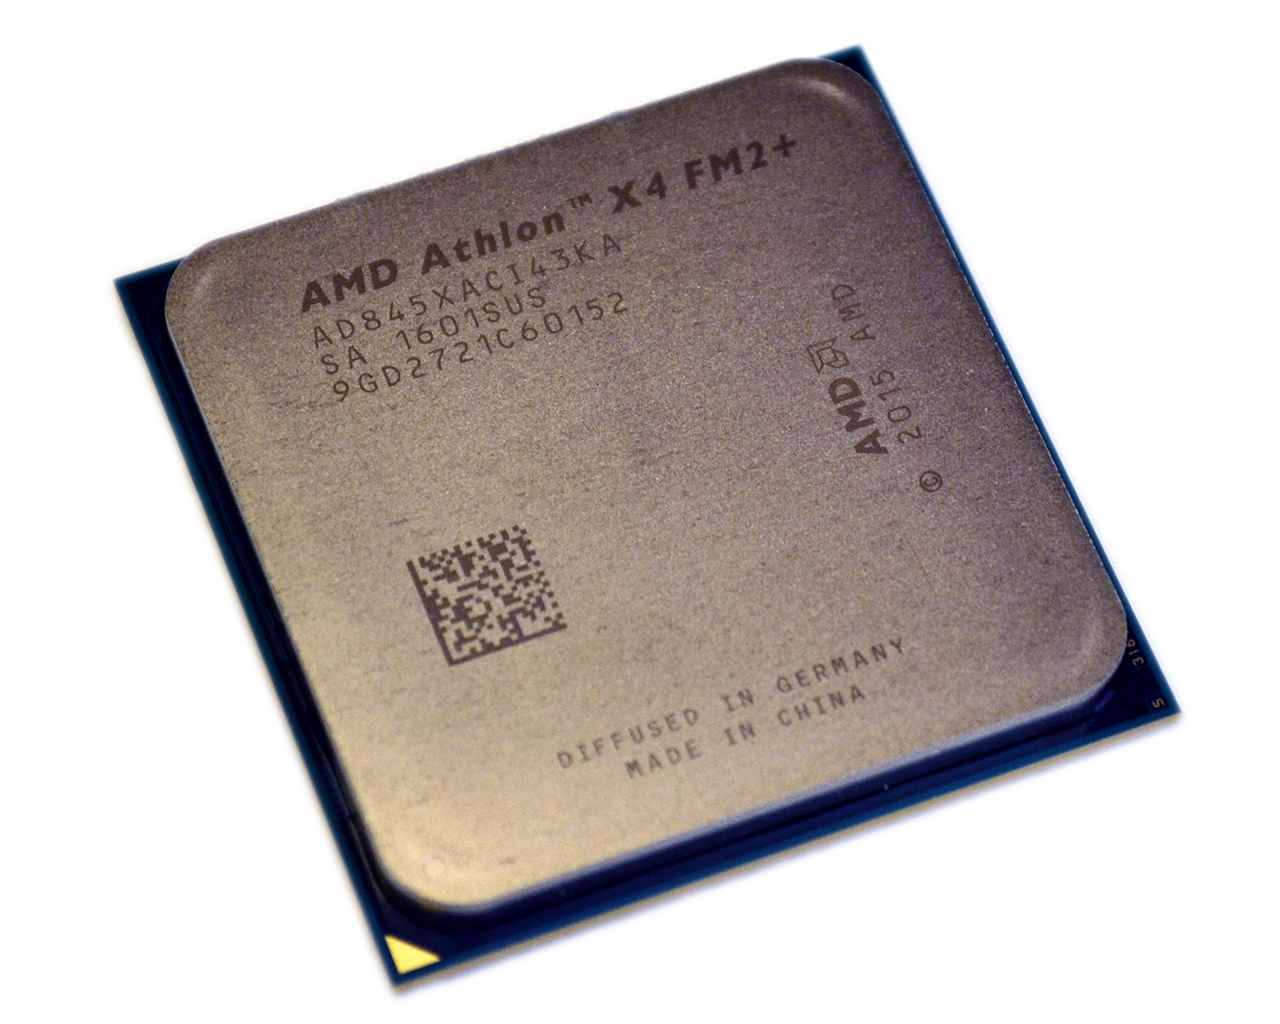 Amd Athlon X4-845 Quad-Core Processor Review